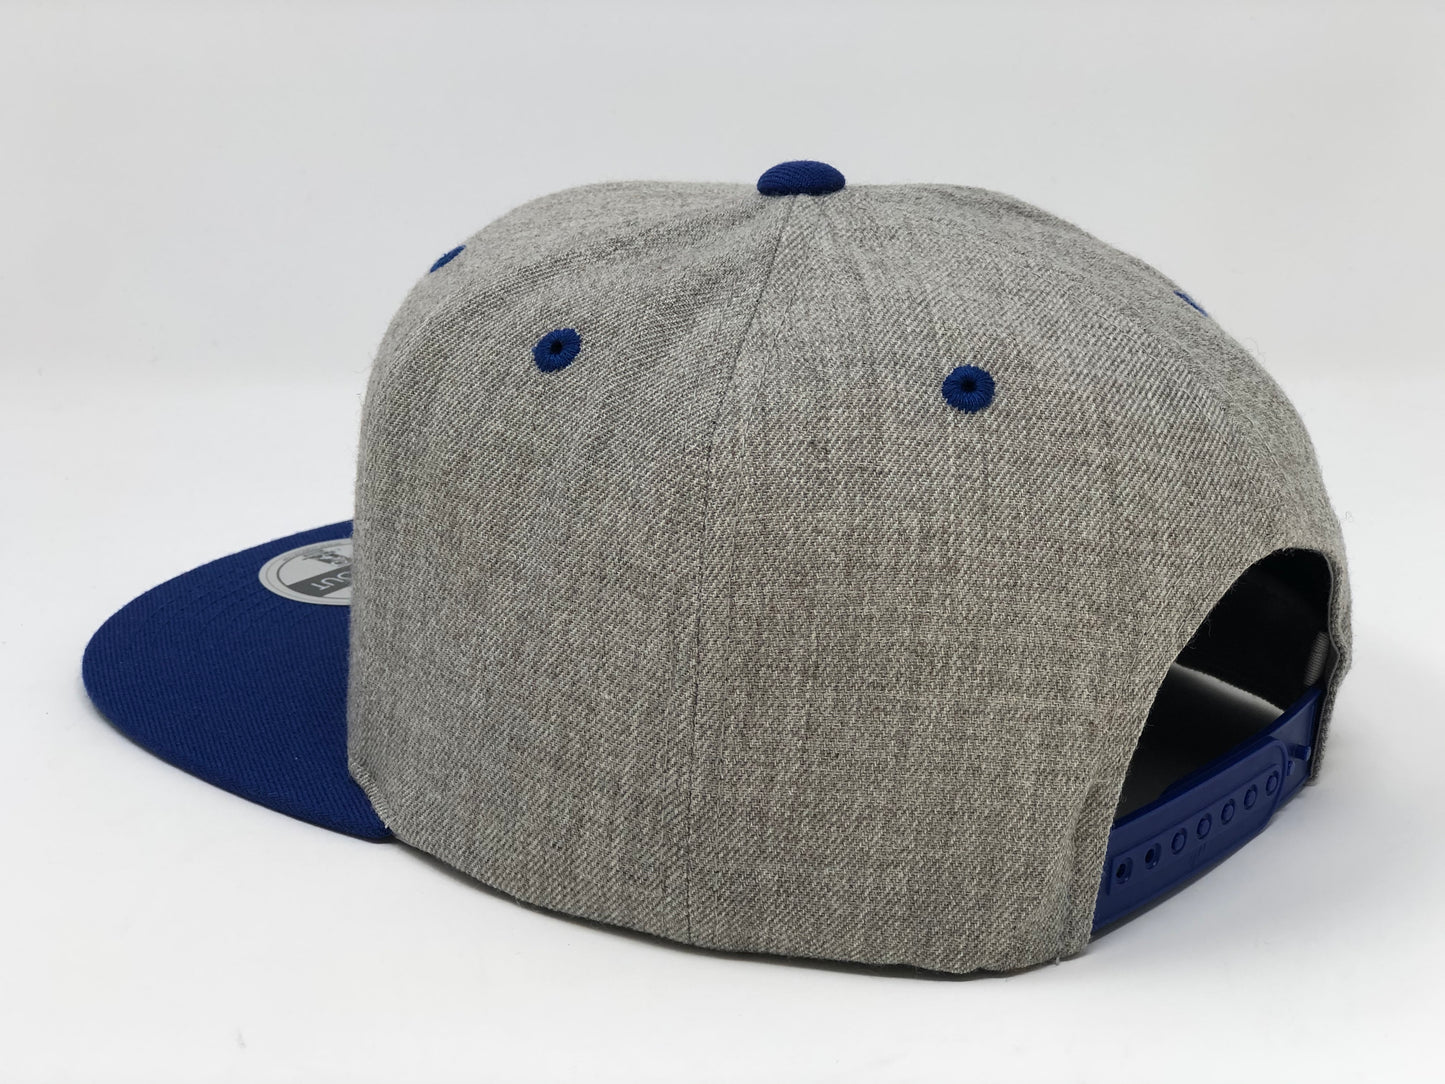 Mookie Betts 50 Hat - Grey/Royal Snapback